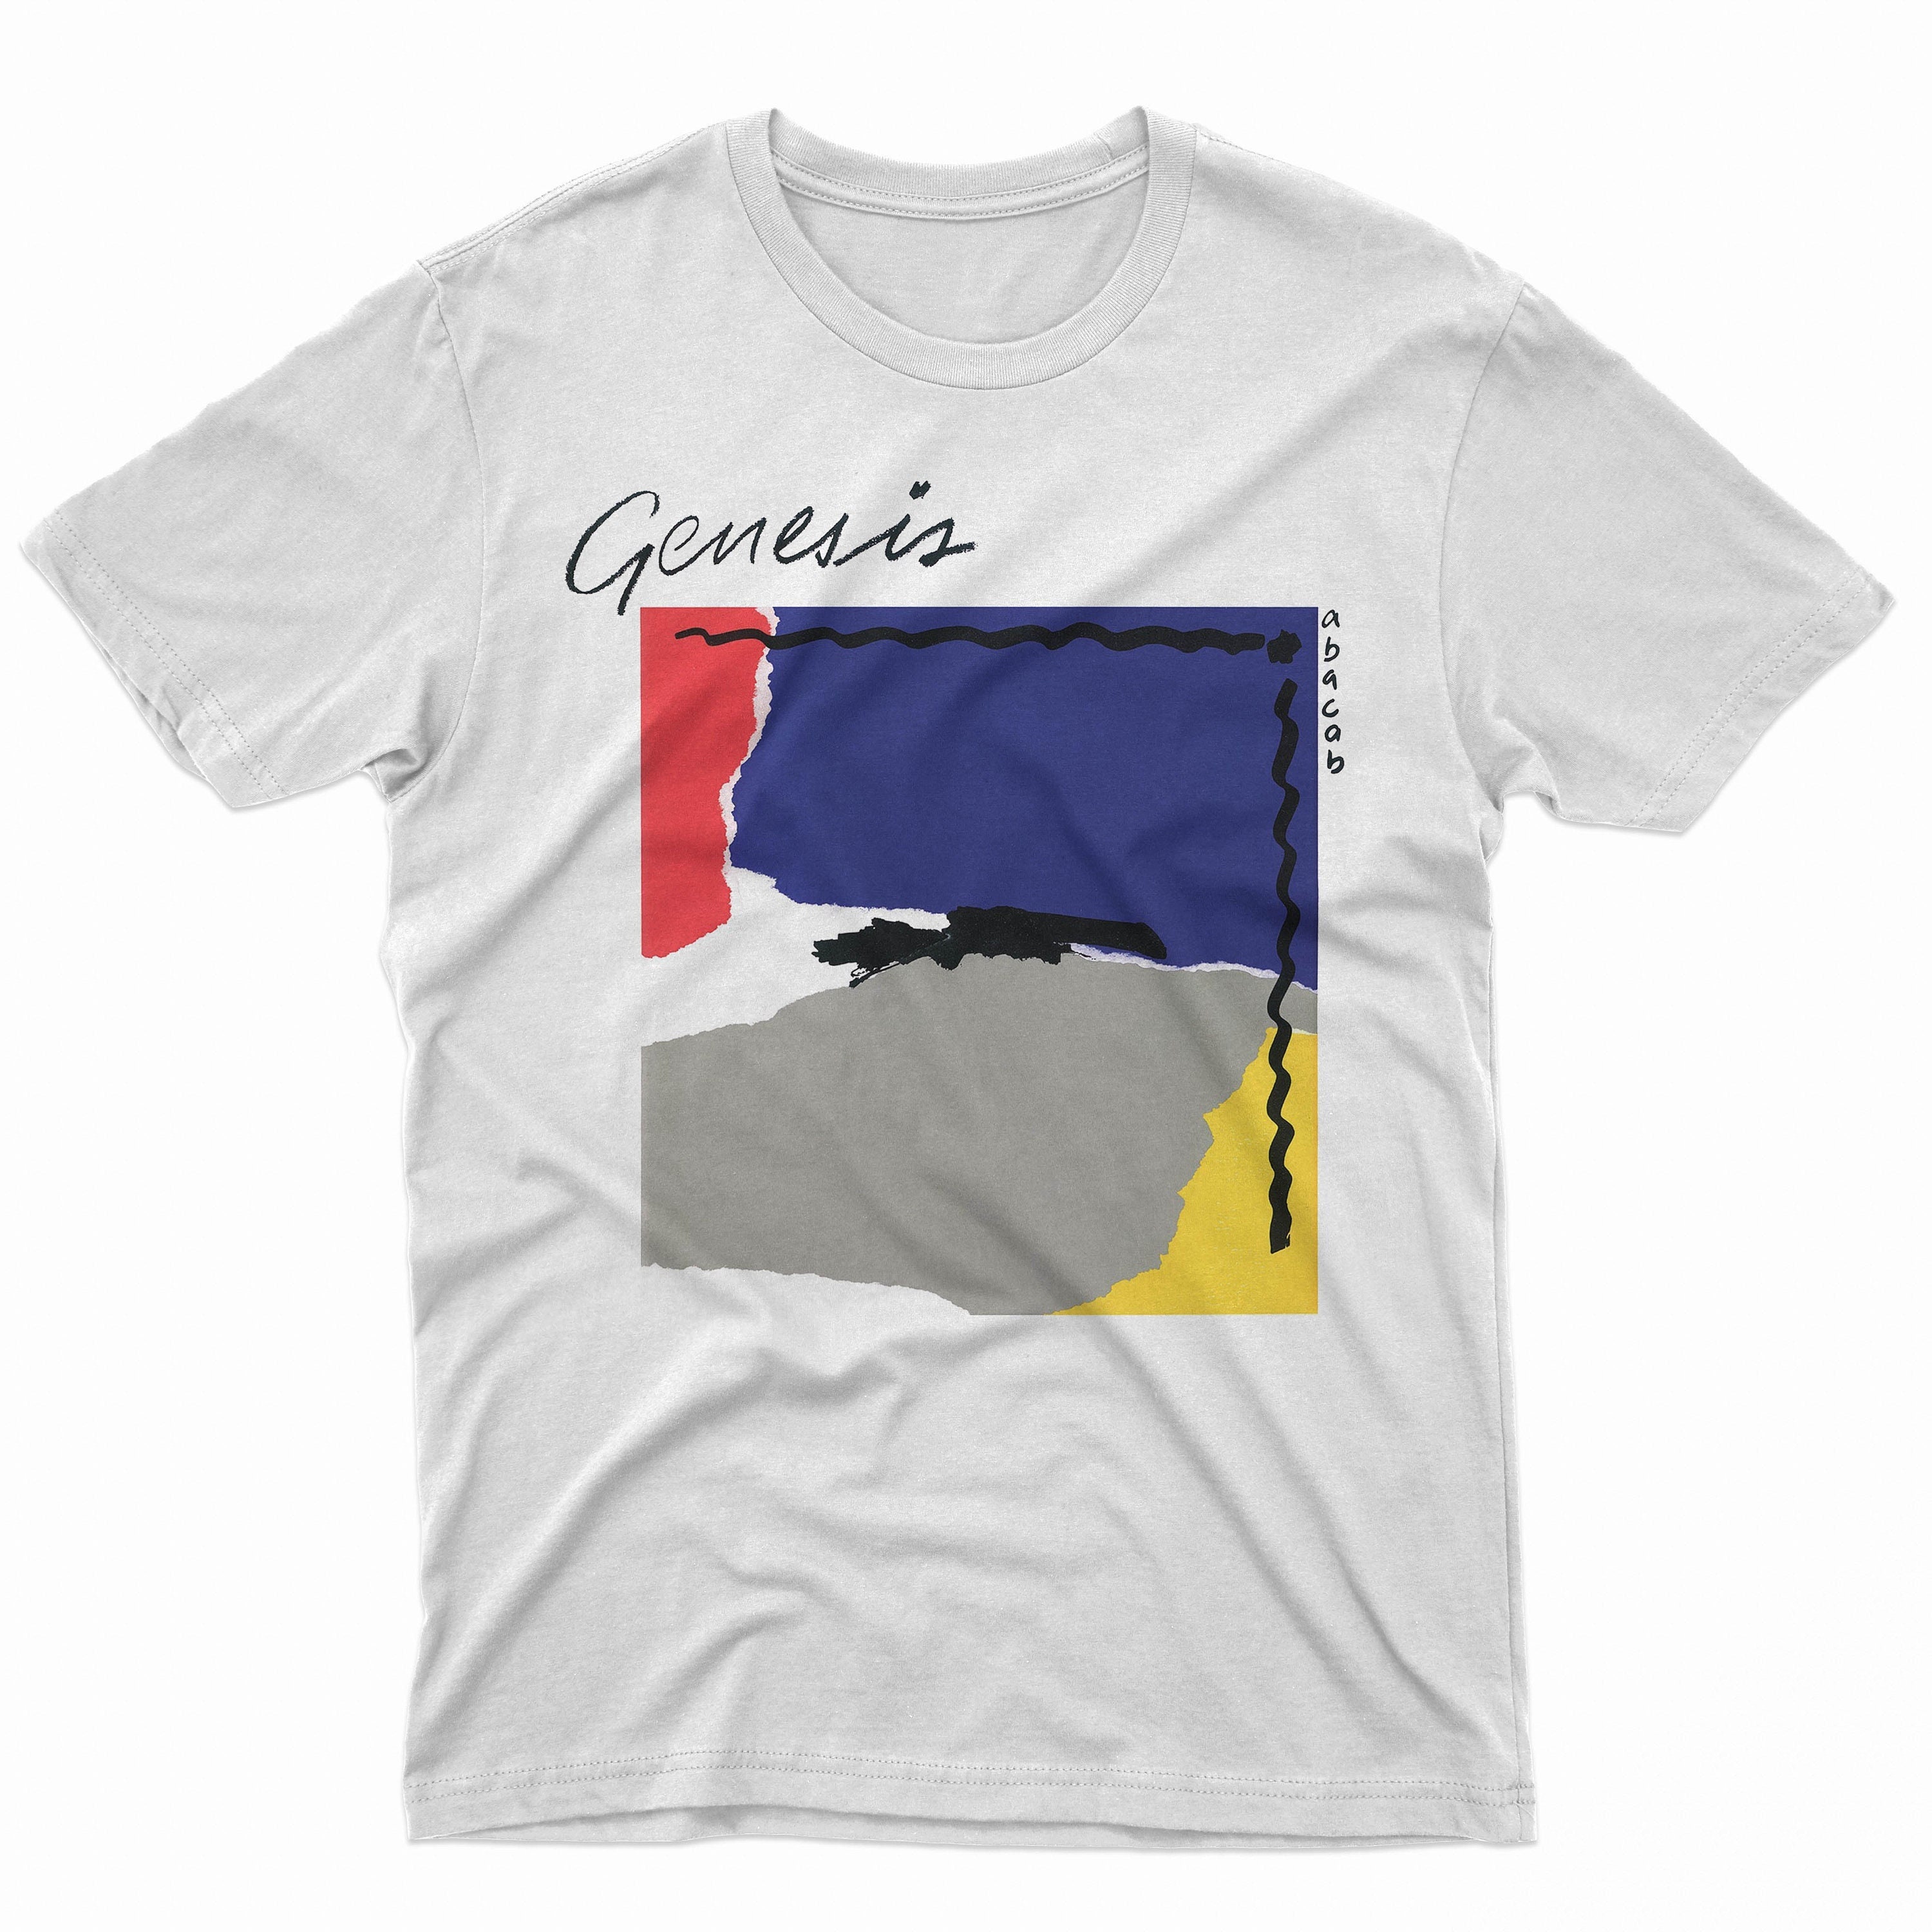 Genesis Abacab Adult White T-shirt